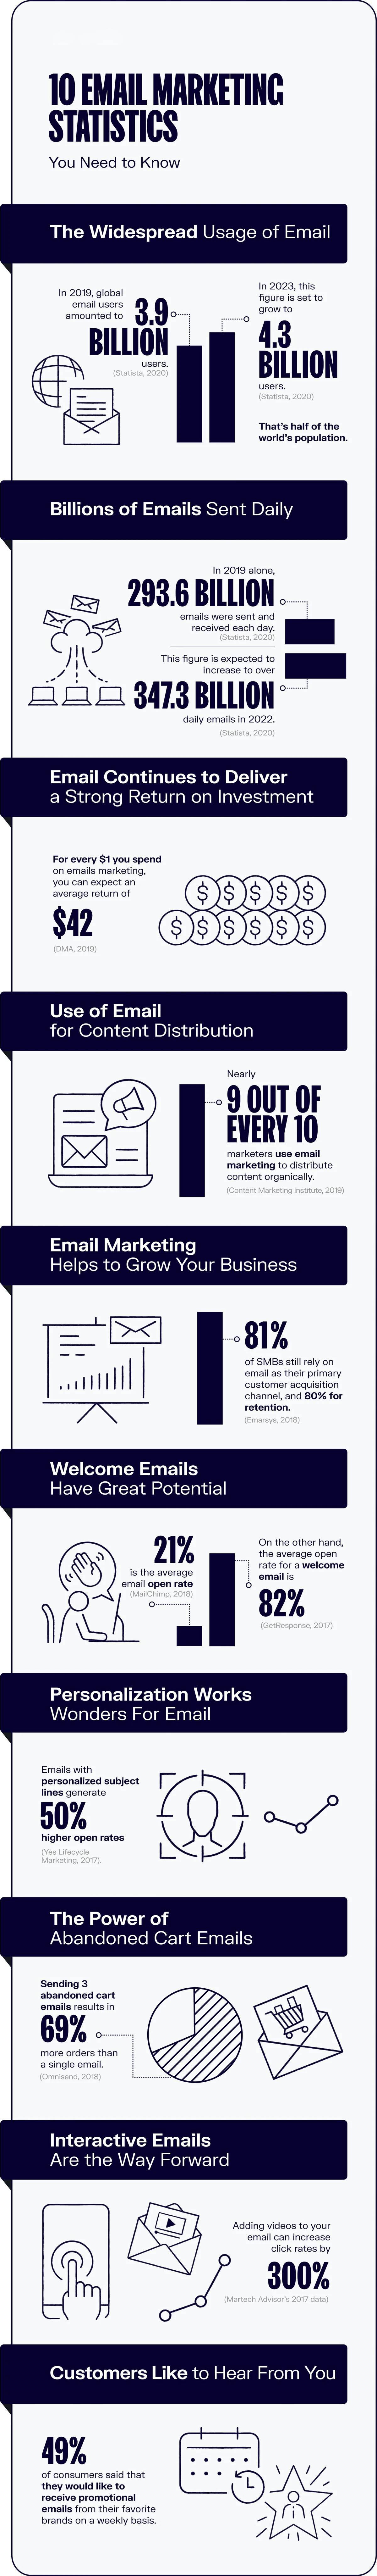 email marketing statistics 